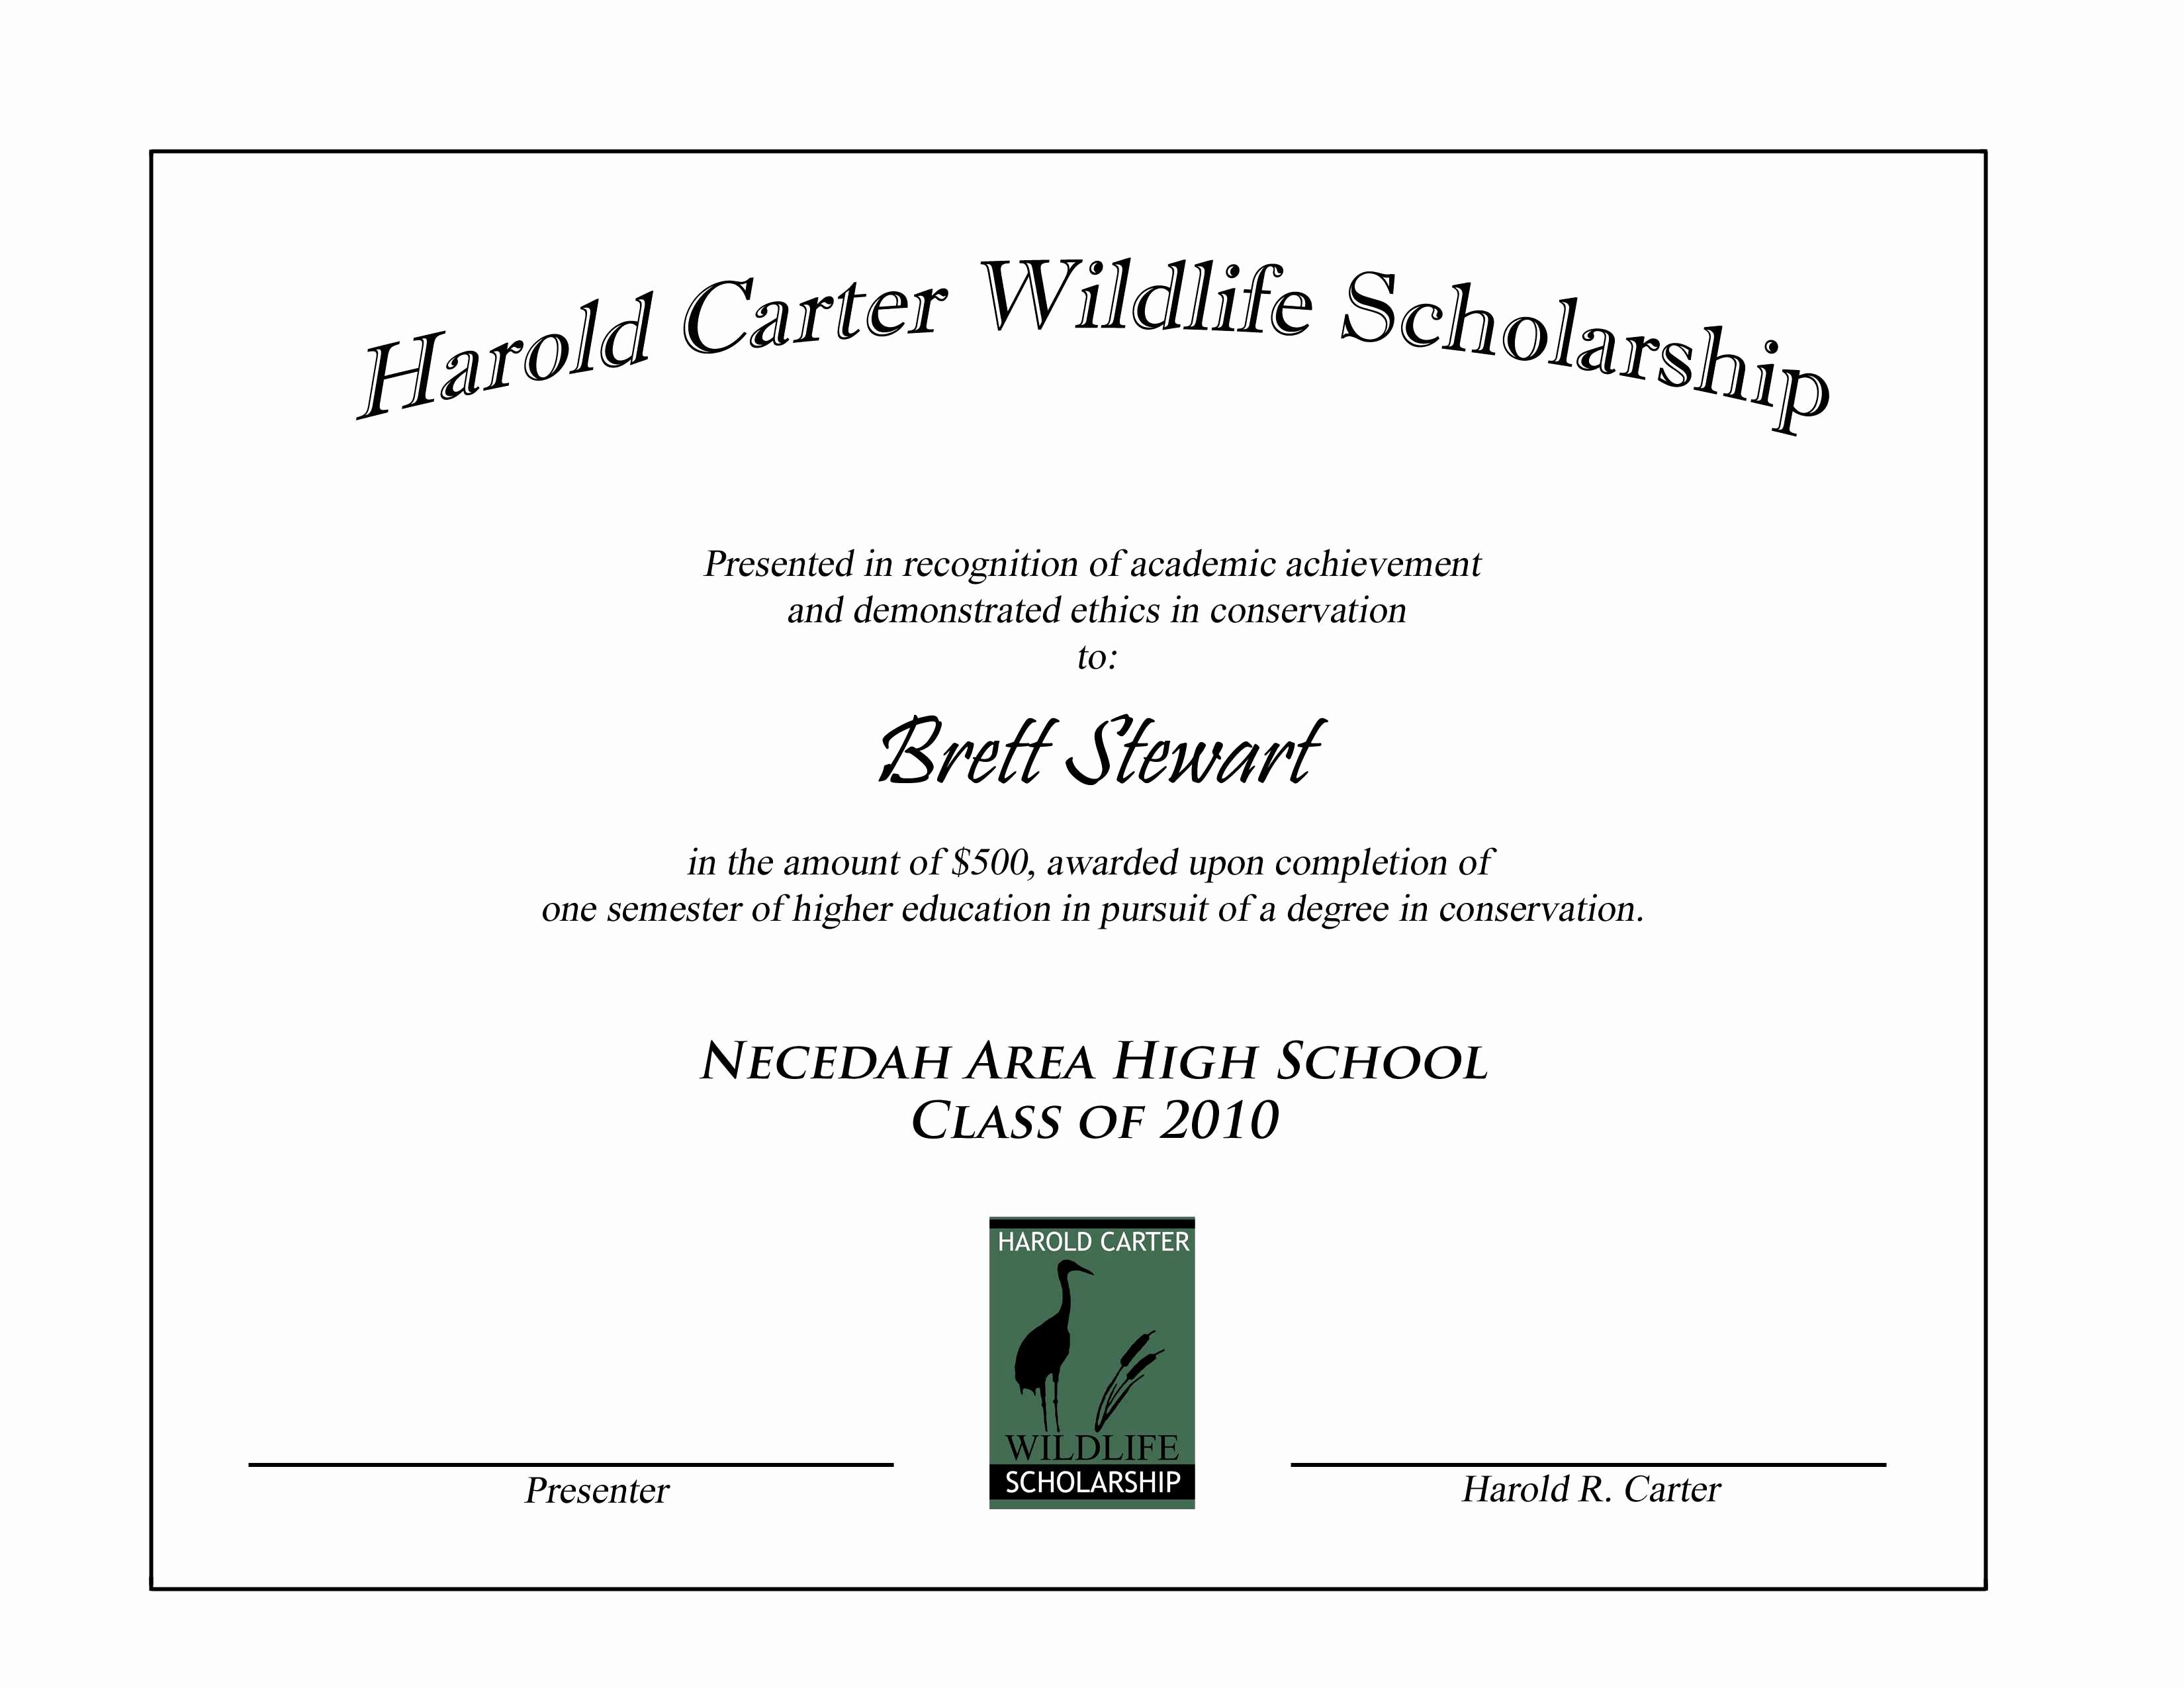 Scholarship Awards Certificates Templates Luxury Harold Carter Wildlife Scholarship